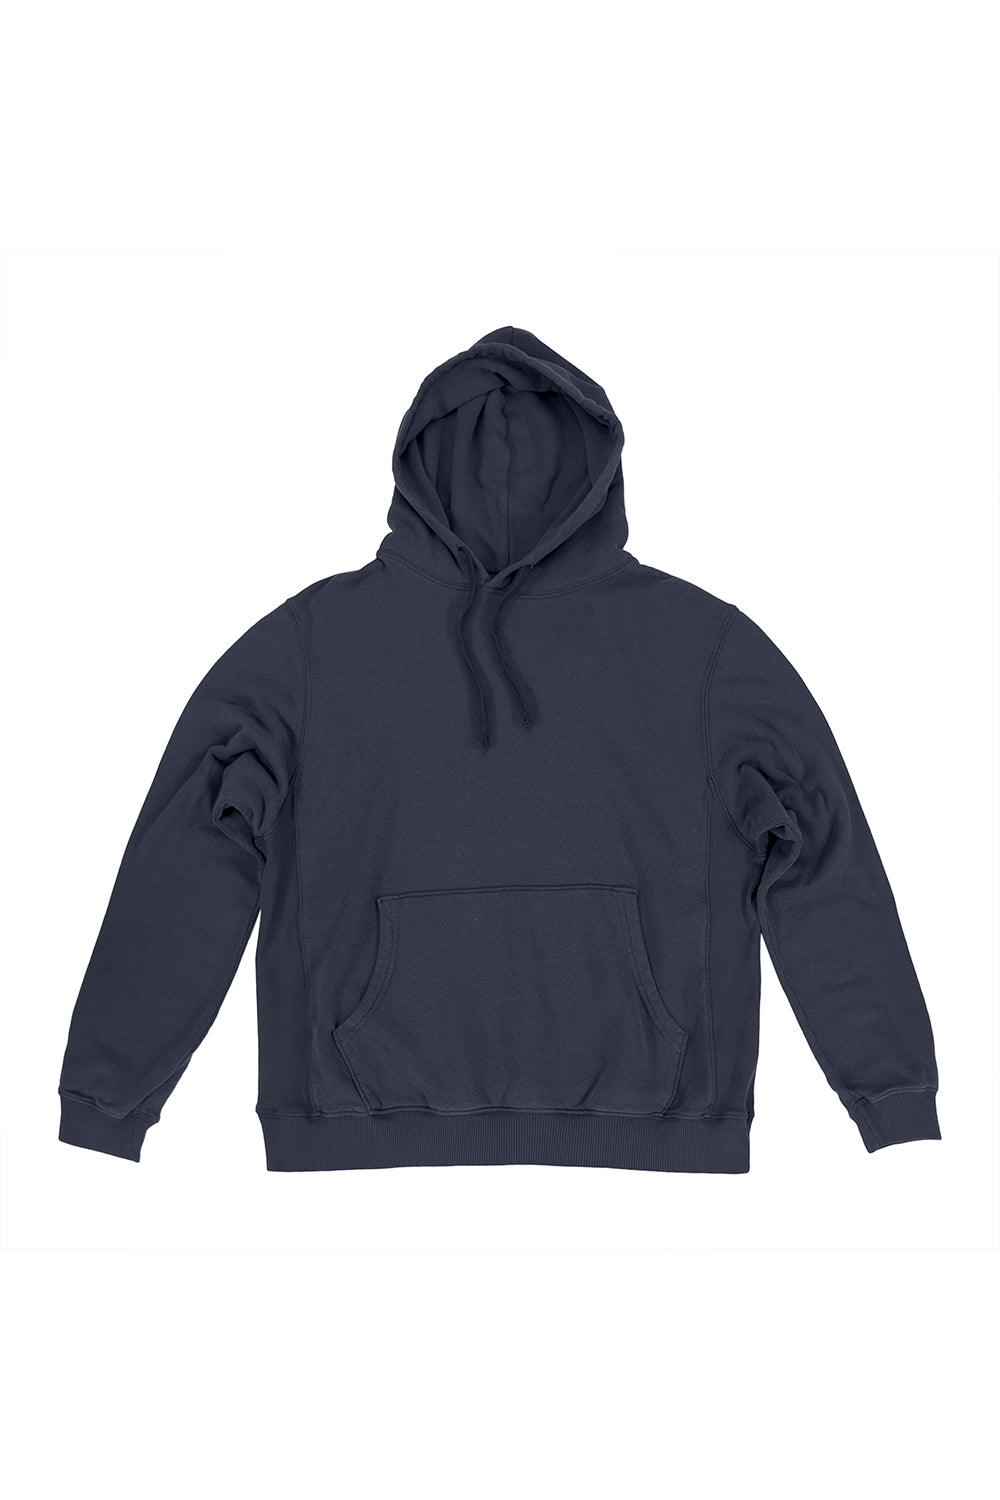 Montauk Hooded Sweatshirt | Jungmaven Hemp Clothing & Accessories / Color: Diesel Gray